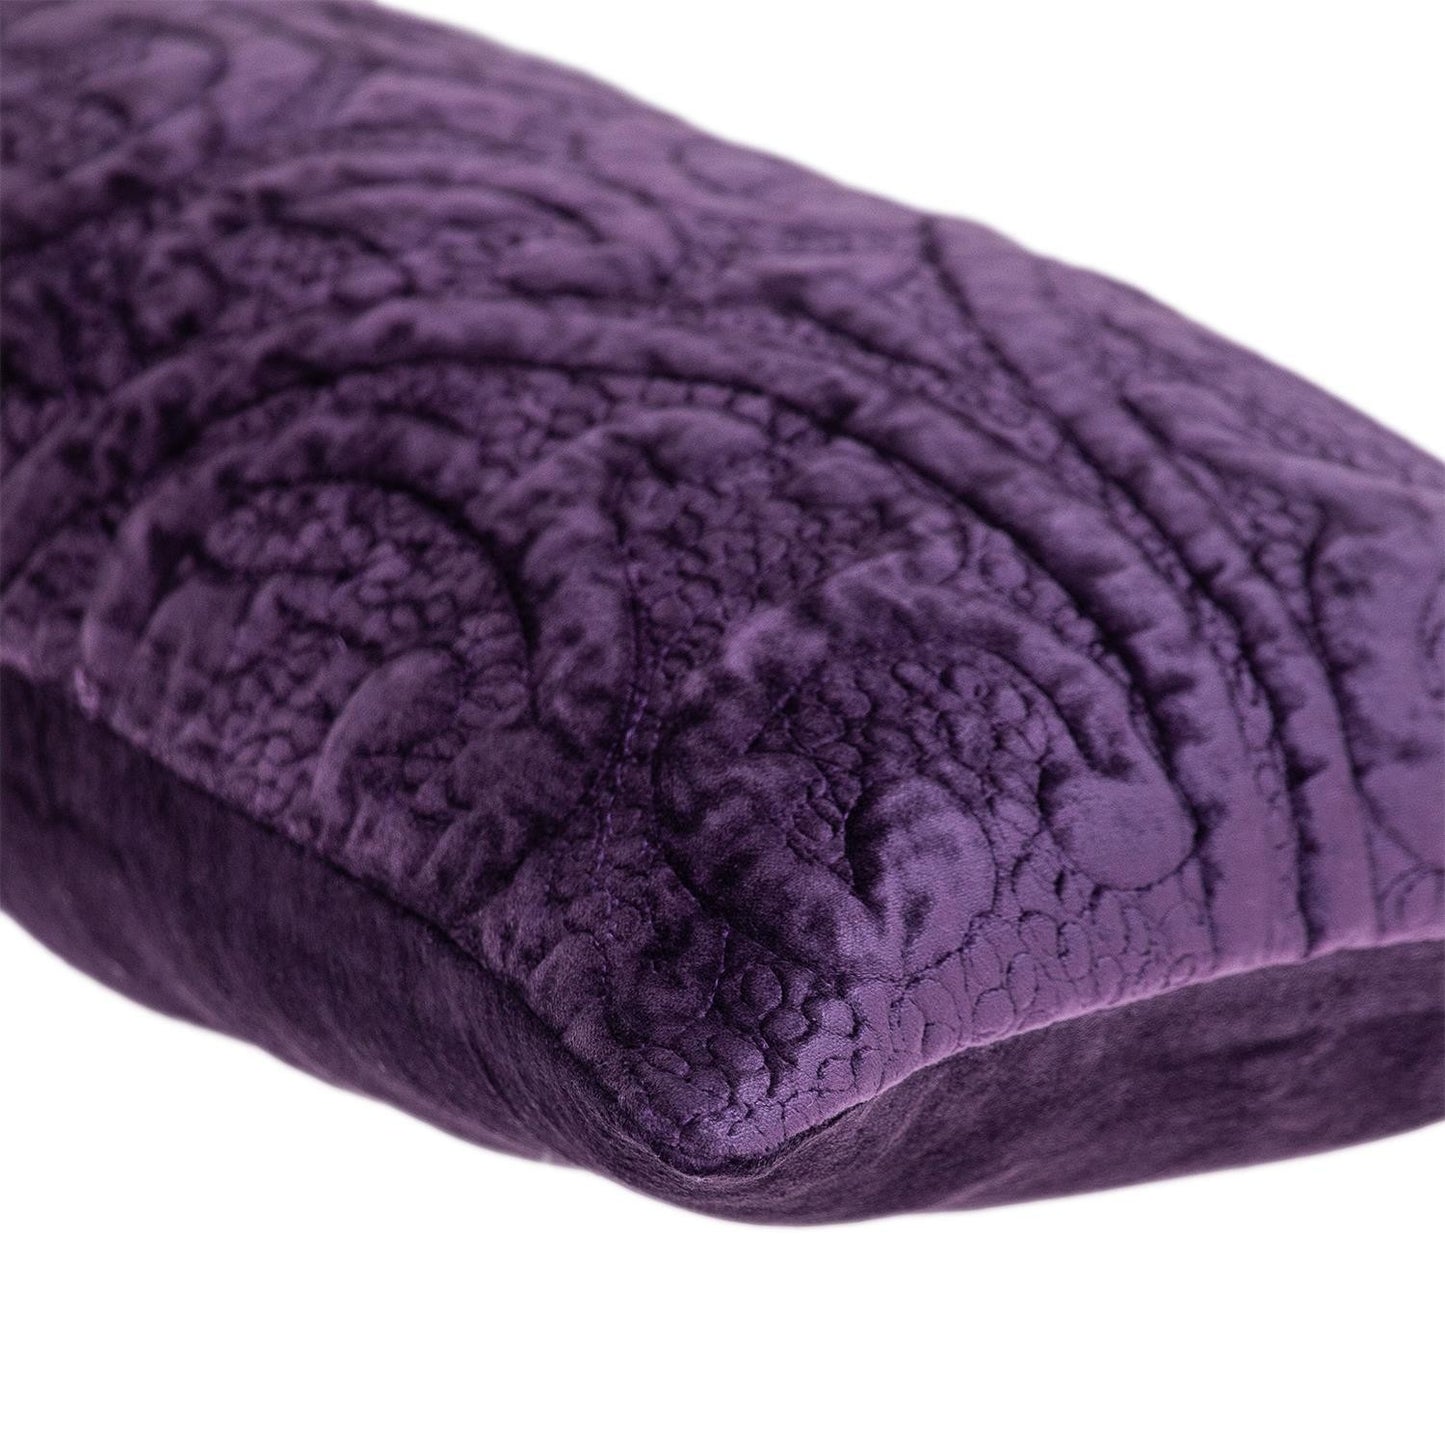 Purple Quilted Velvet Lumbar Throw Pillow